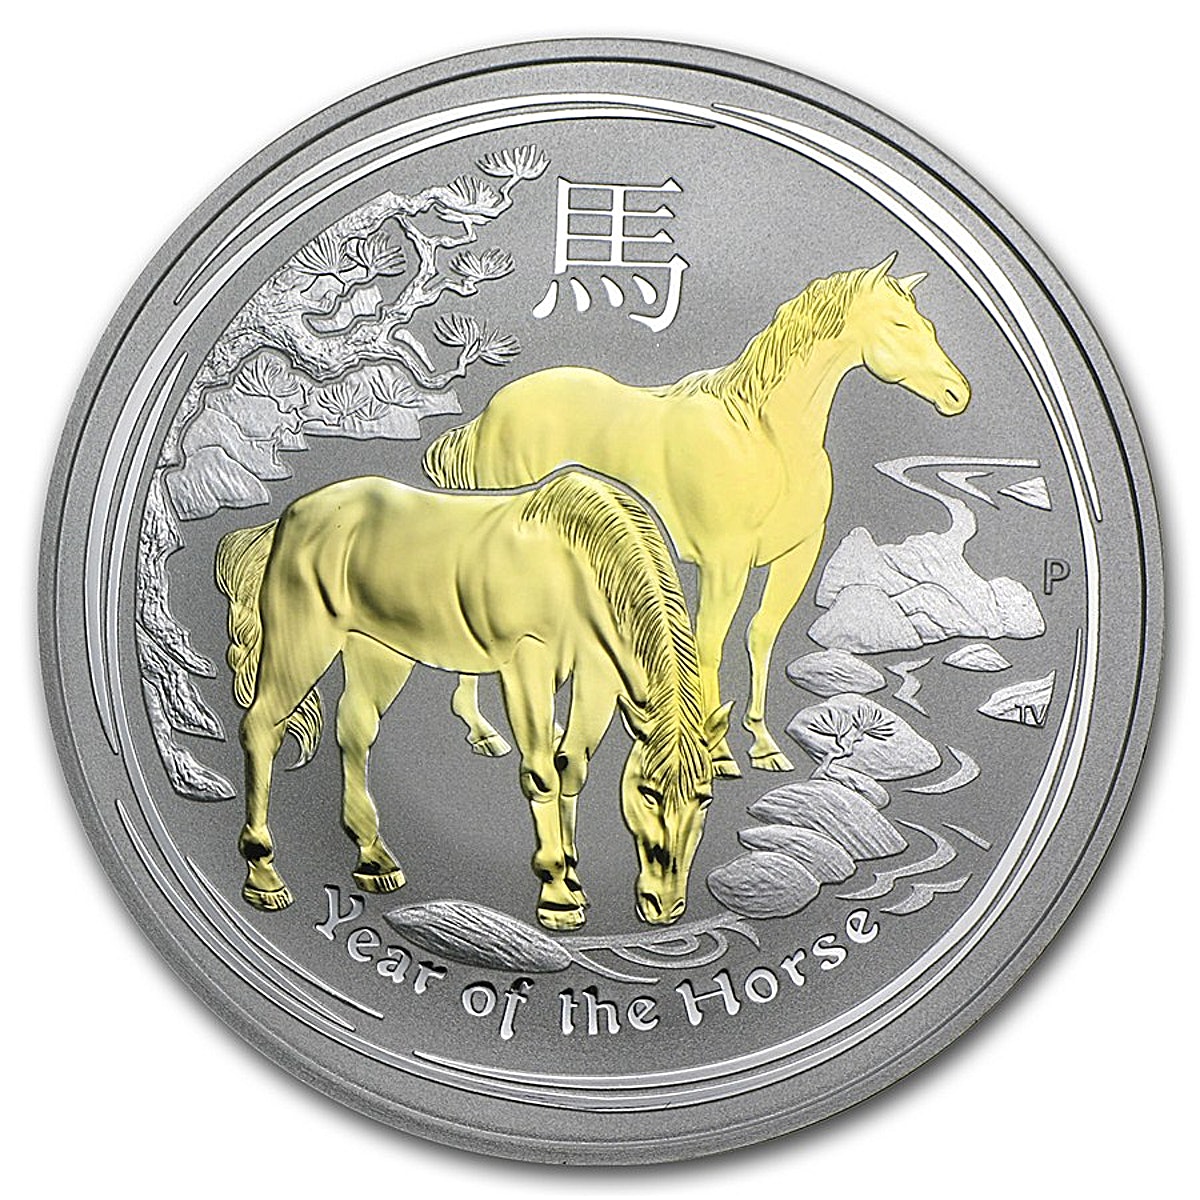 2014 год серебро. 2022 Australia 1 oz Silver Australian Brumby bu. Монета год лошади 2014 серебро. Монета с лошадью. Монета год лошади 2014 серебро новая Зеландия.